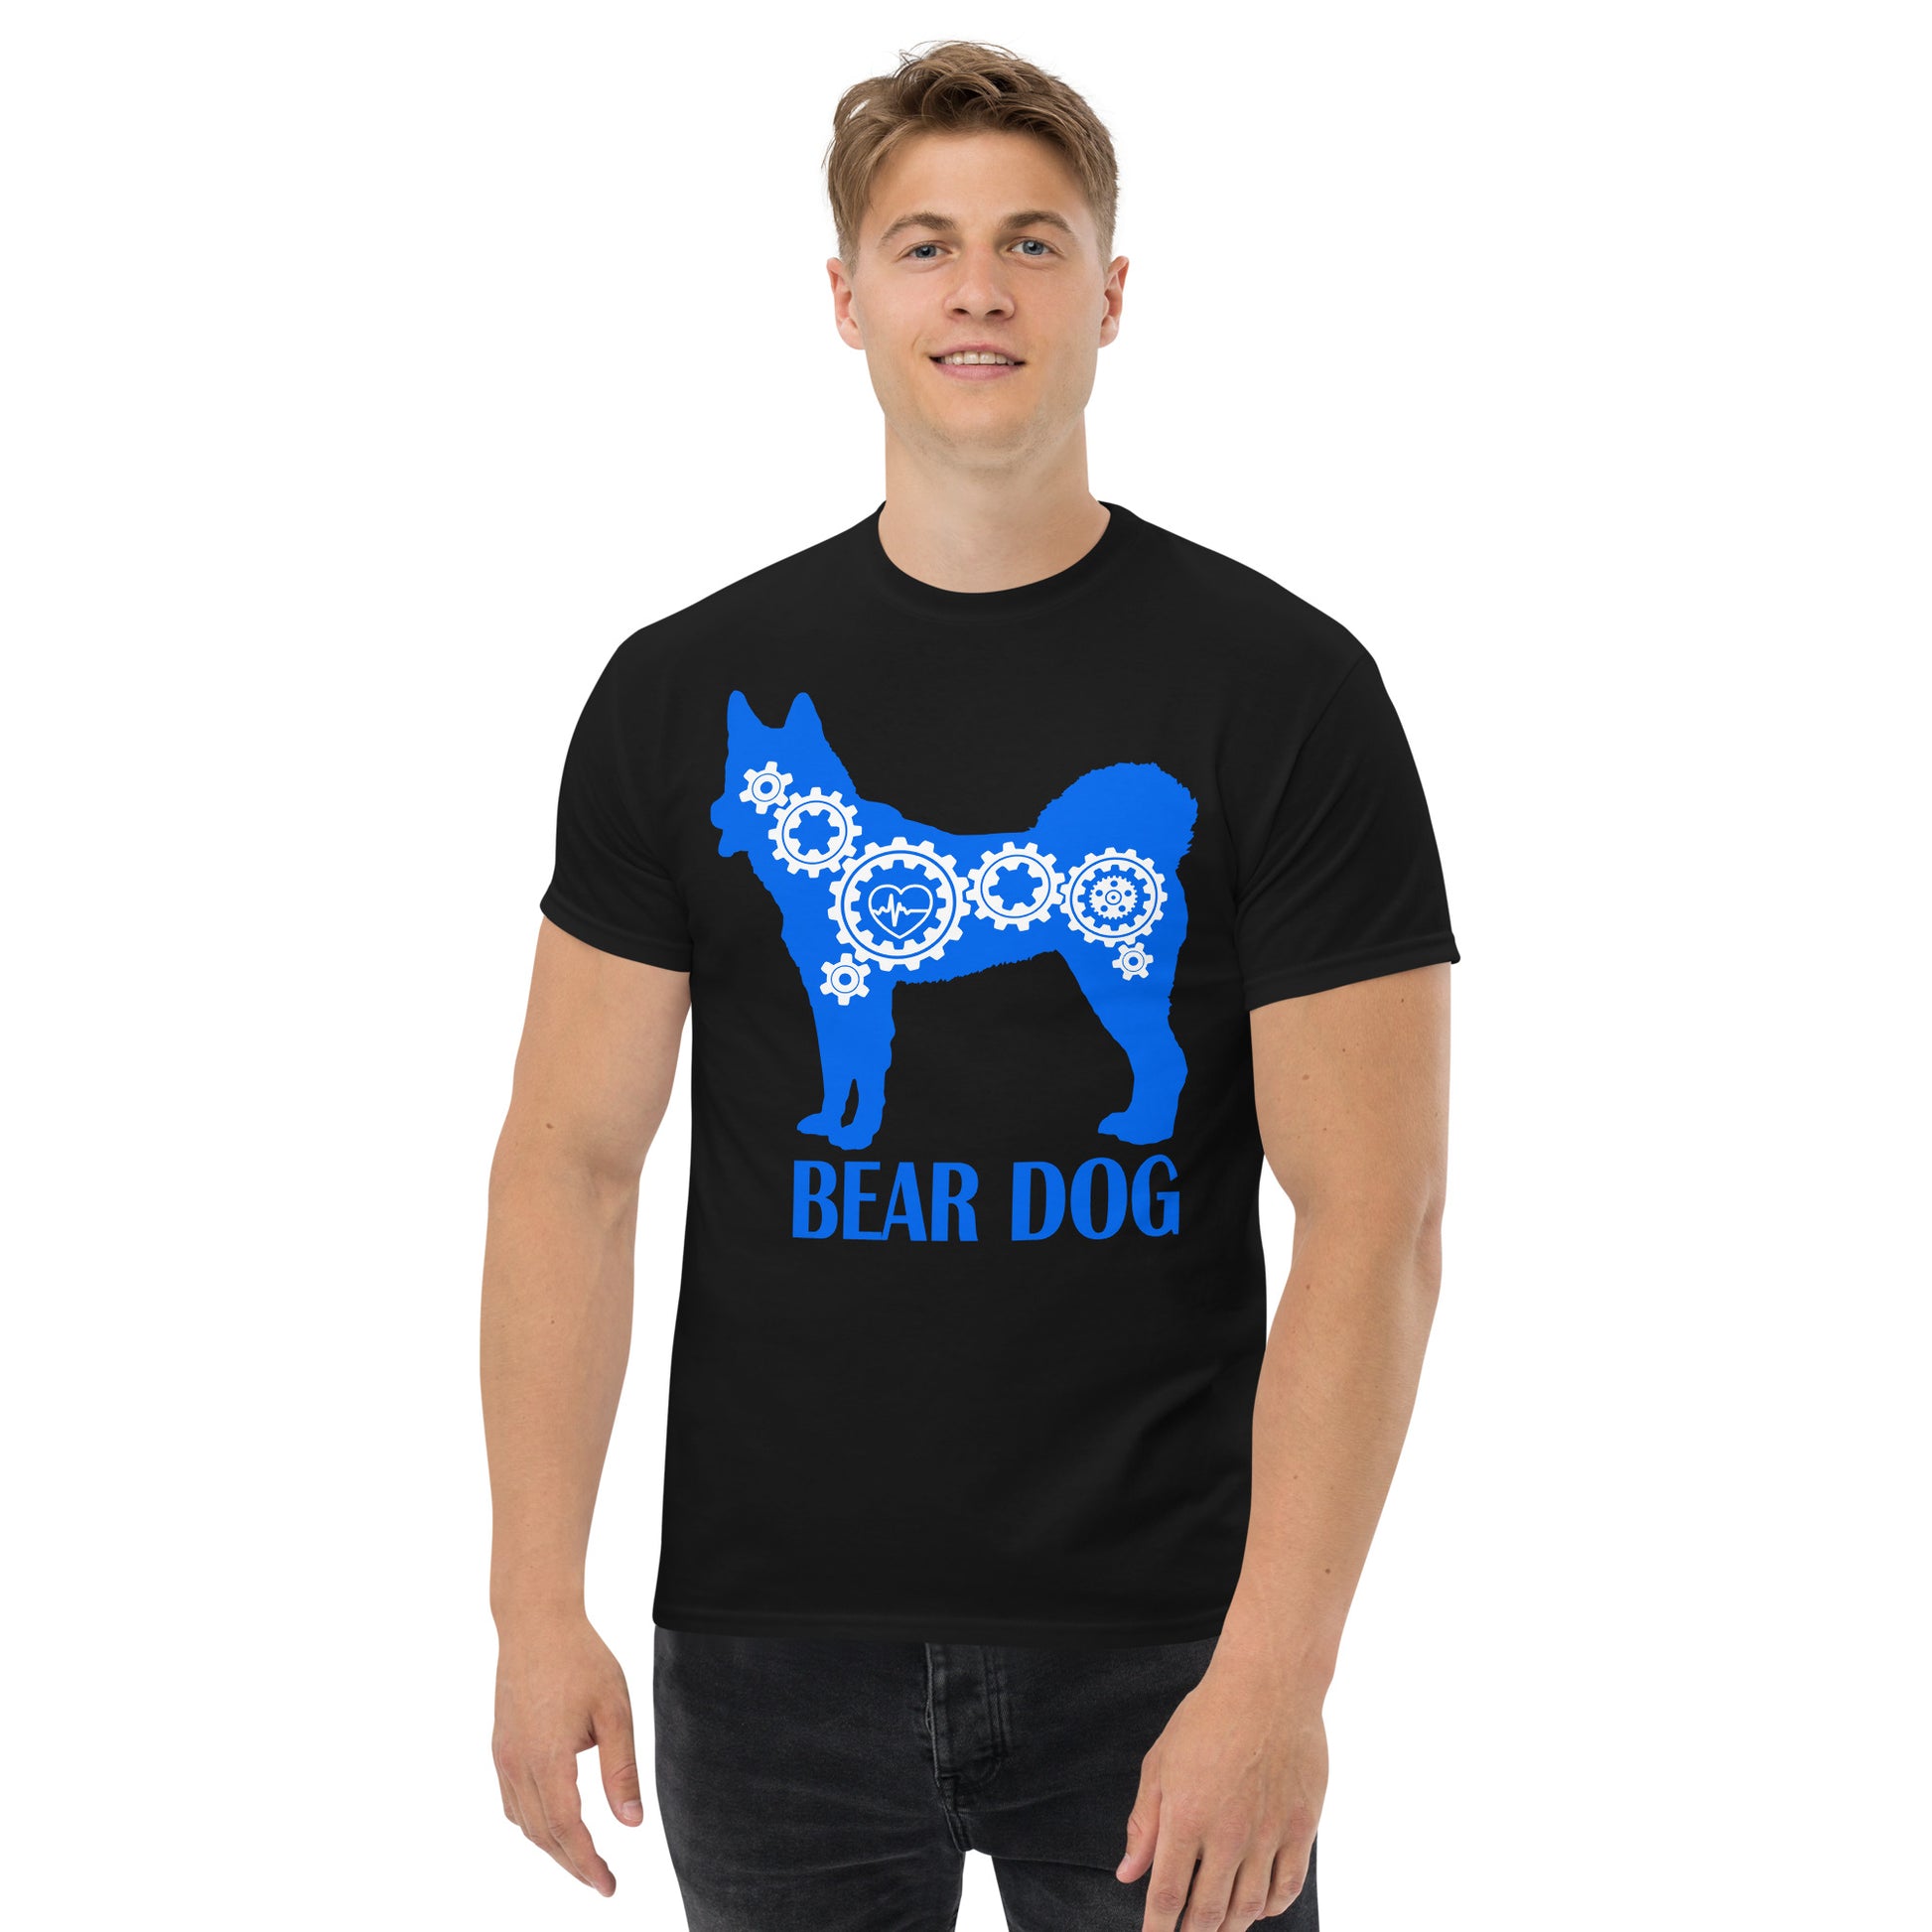 Bear Dog Bionic men’s black t-shirt by Dog Artistry.